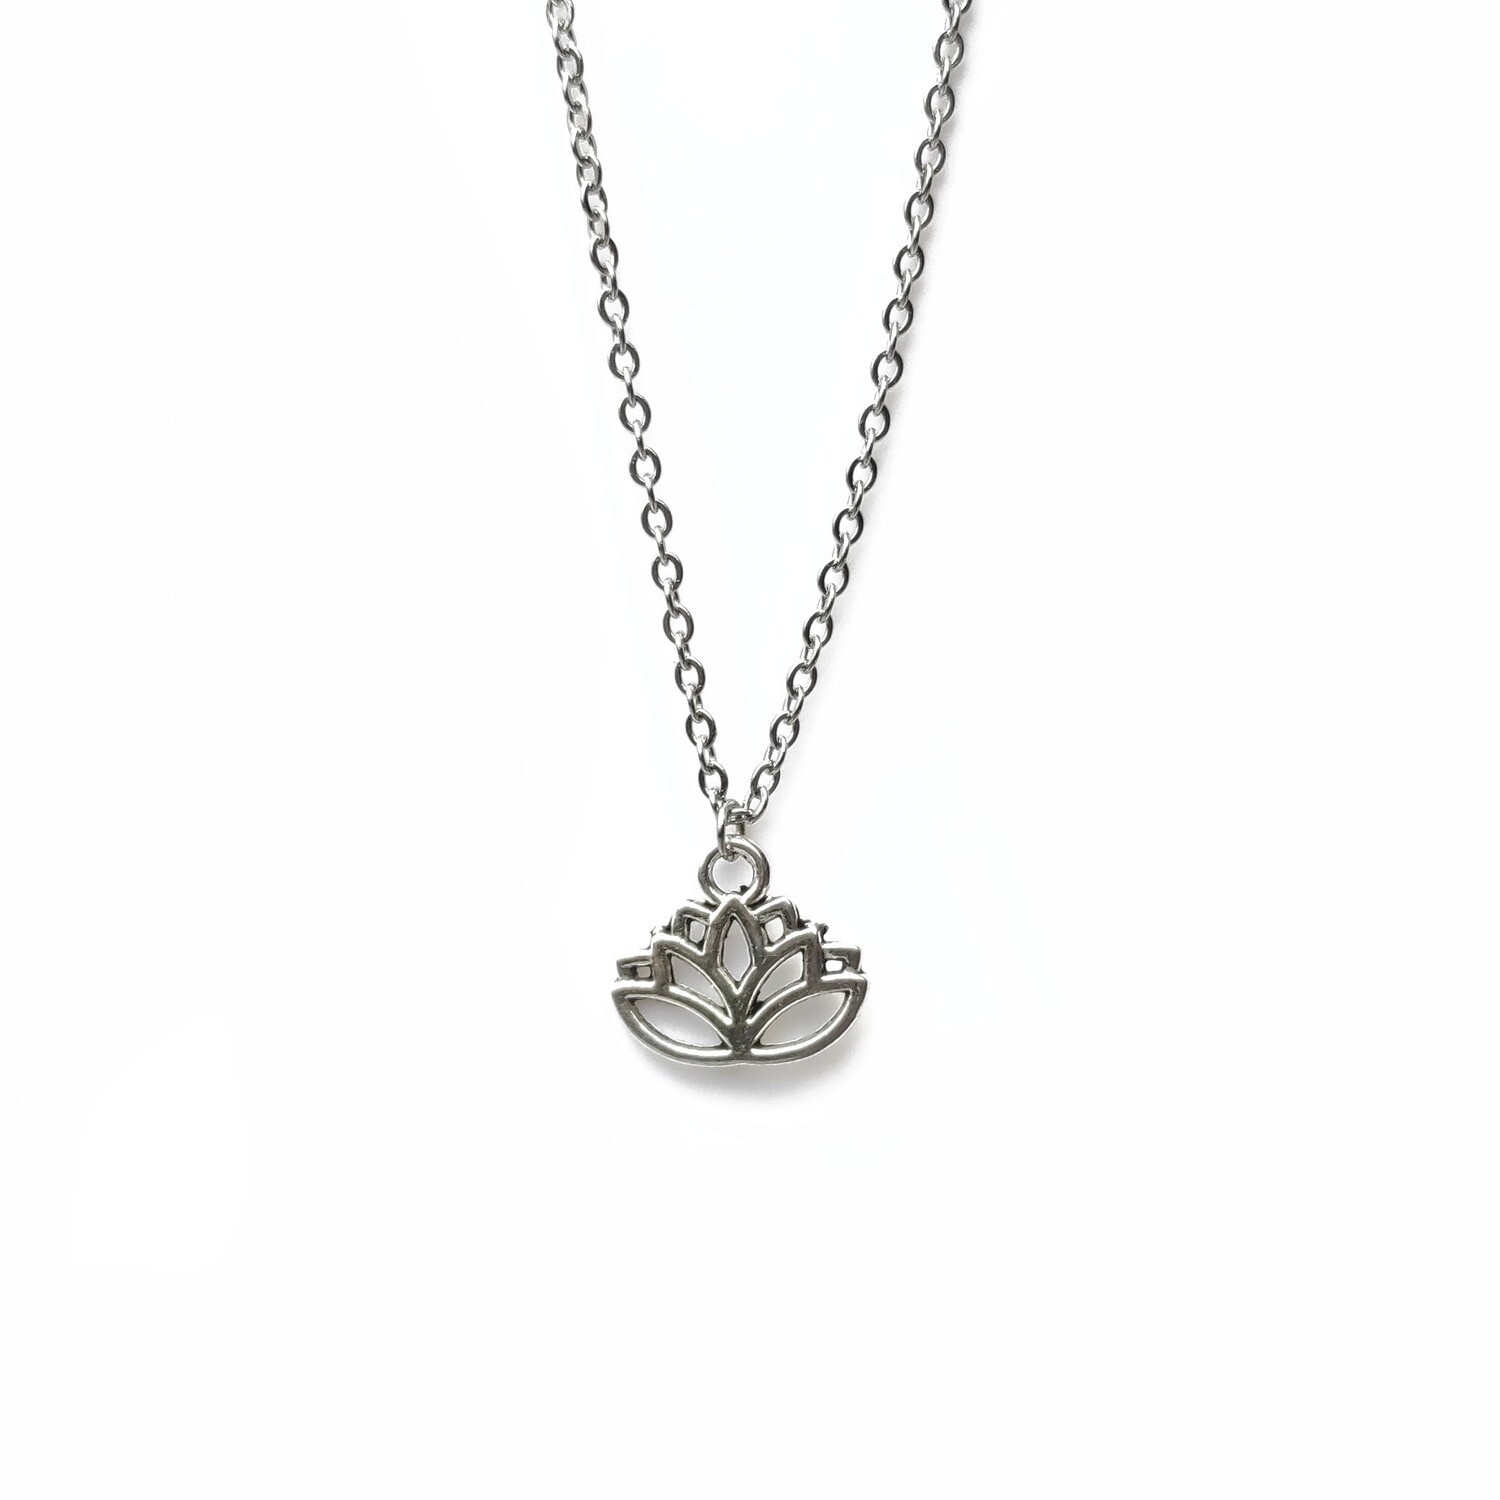 Lotus flower necklace 